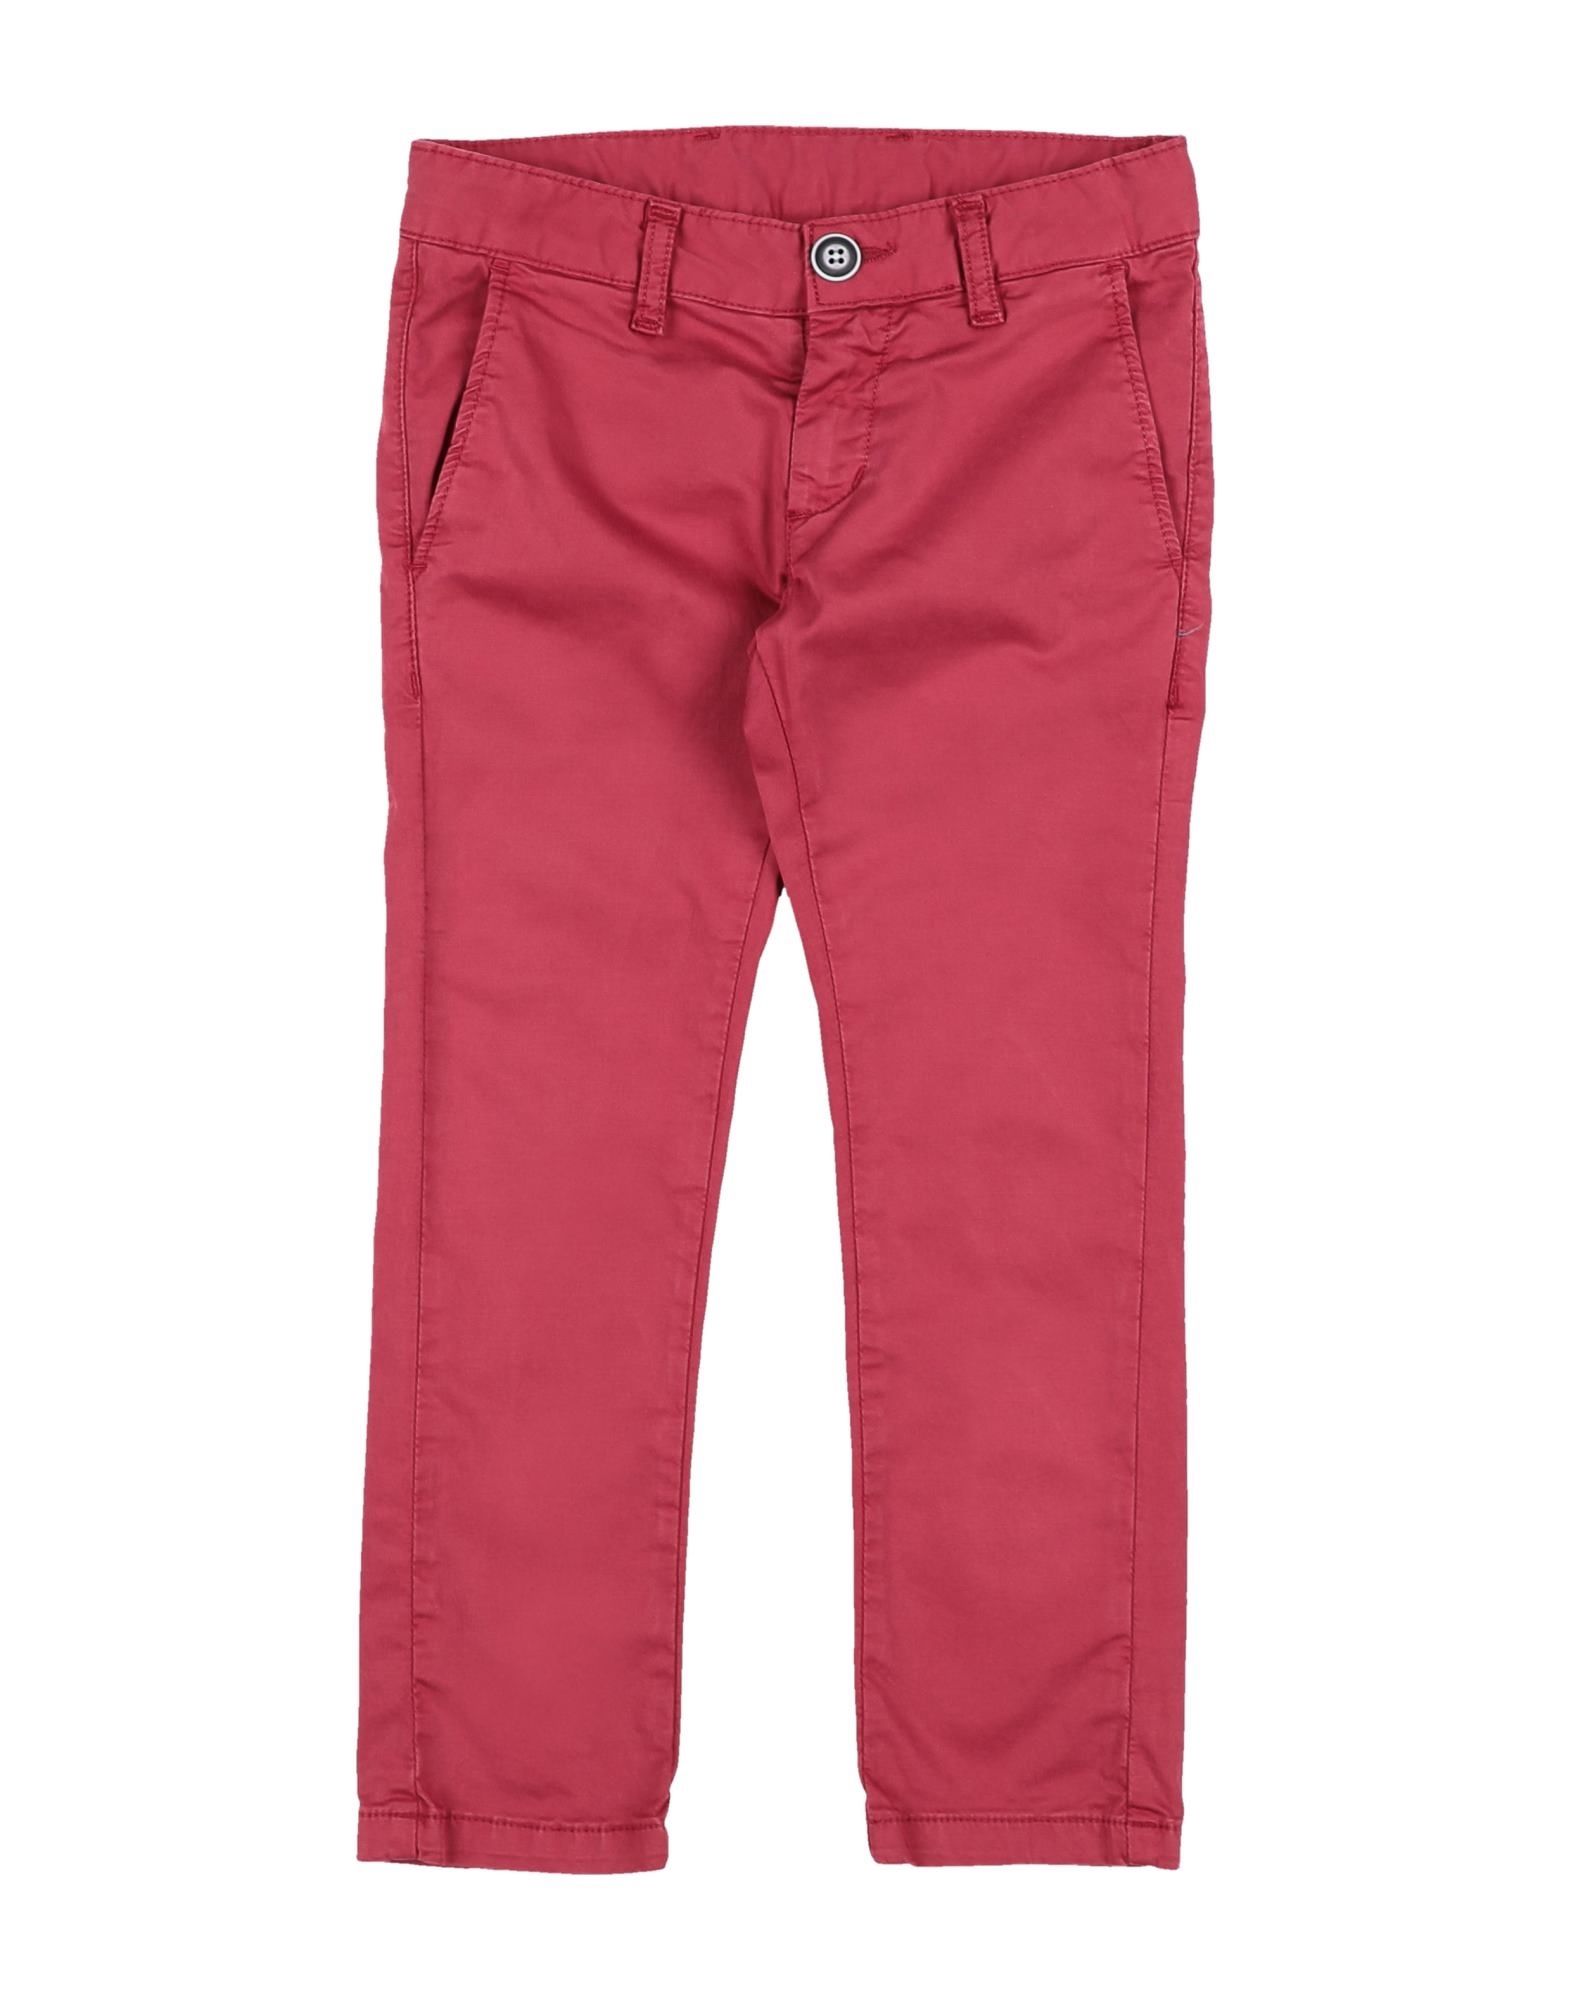 Aletta Kids' Pants In Brick Red